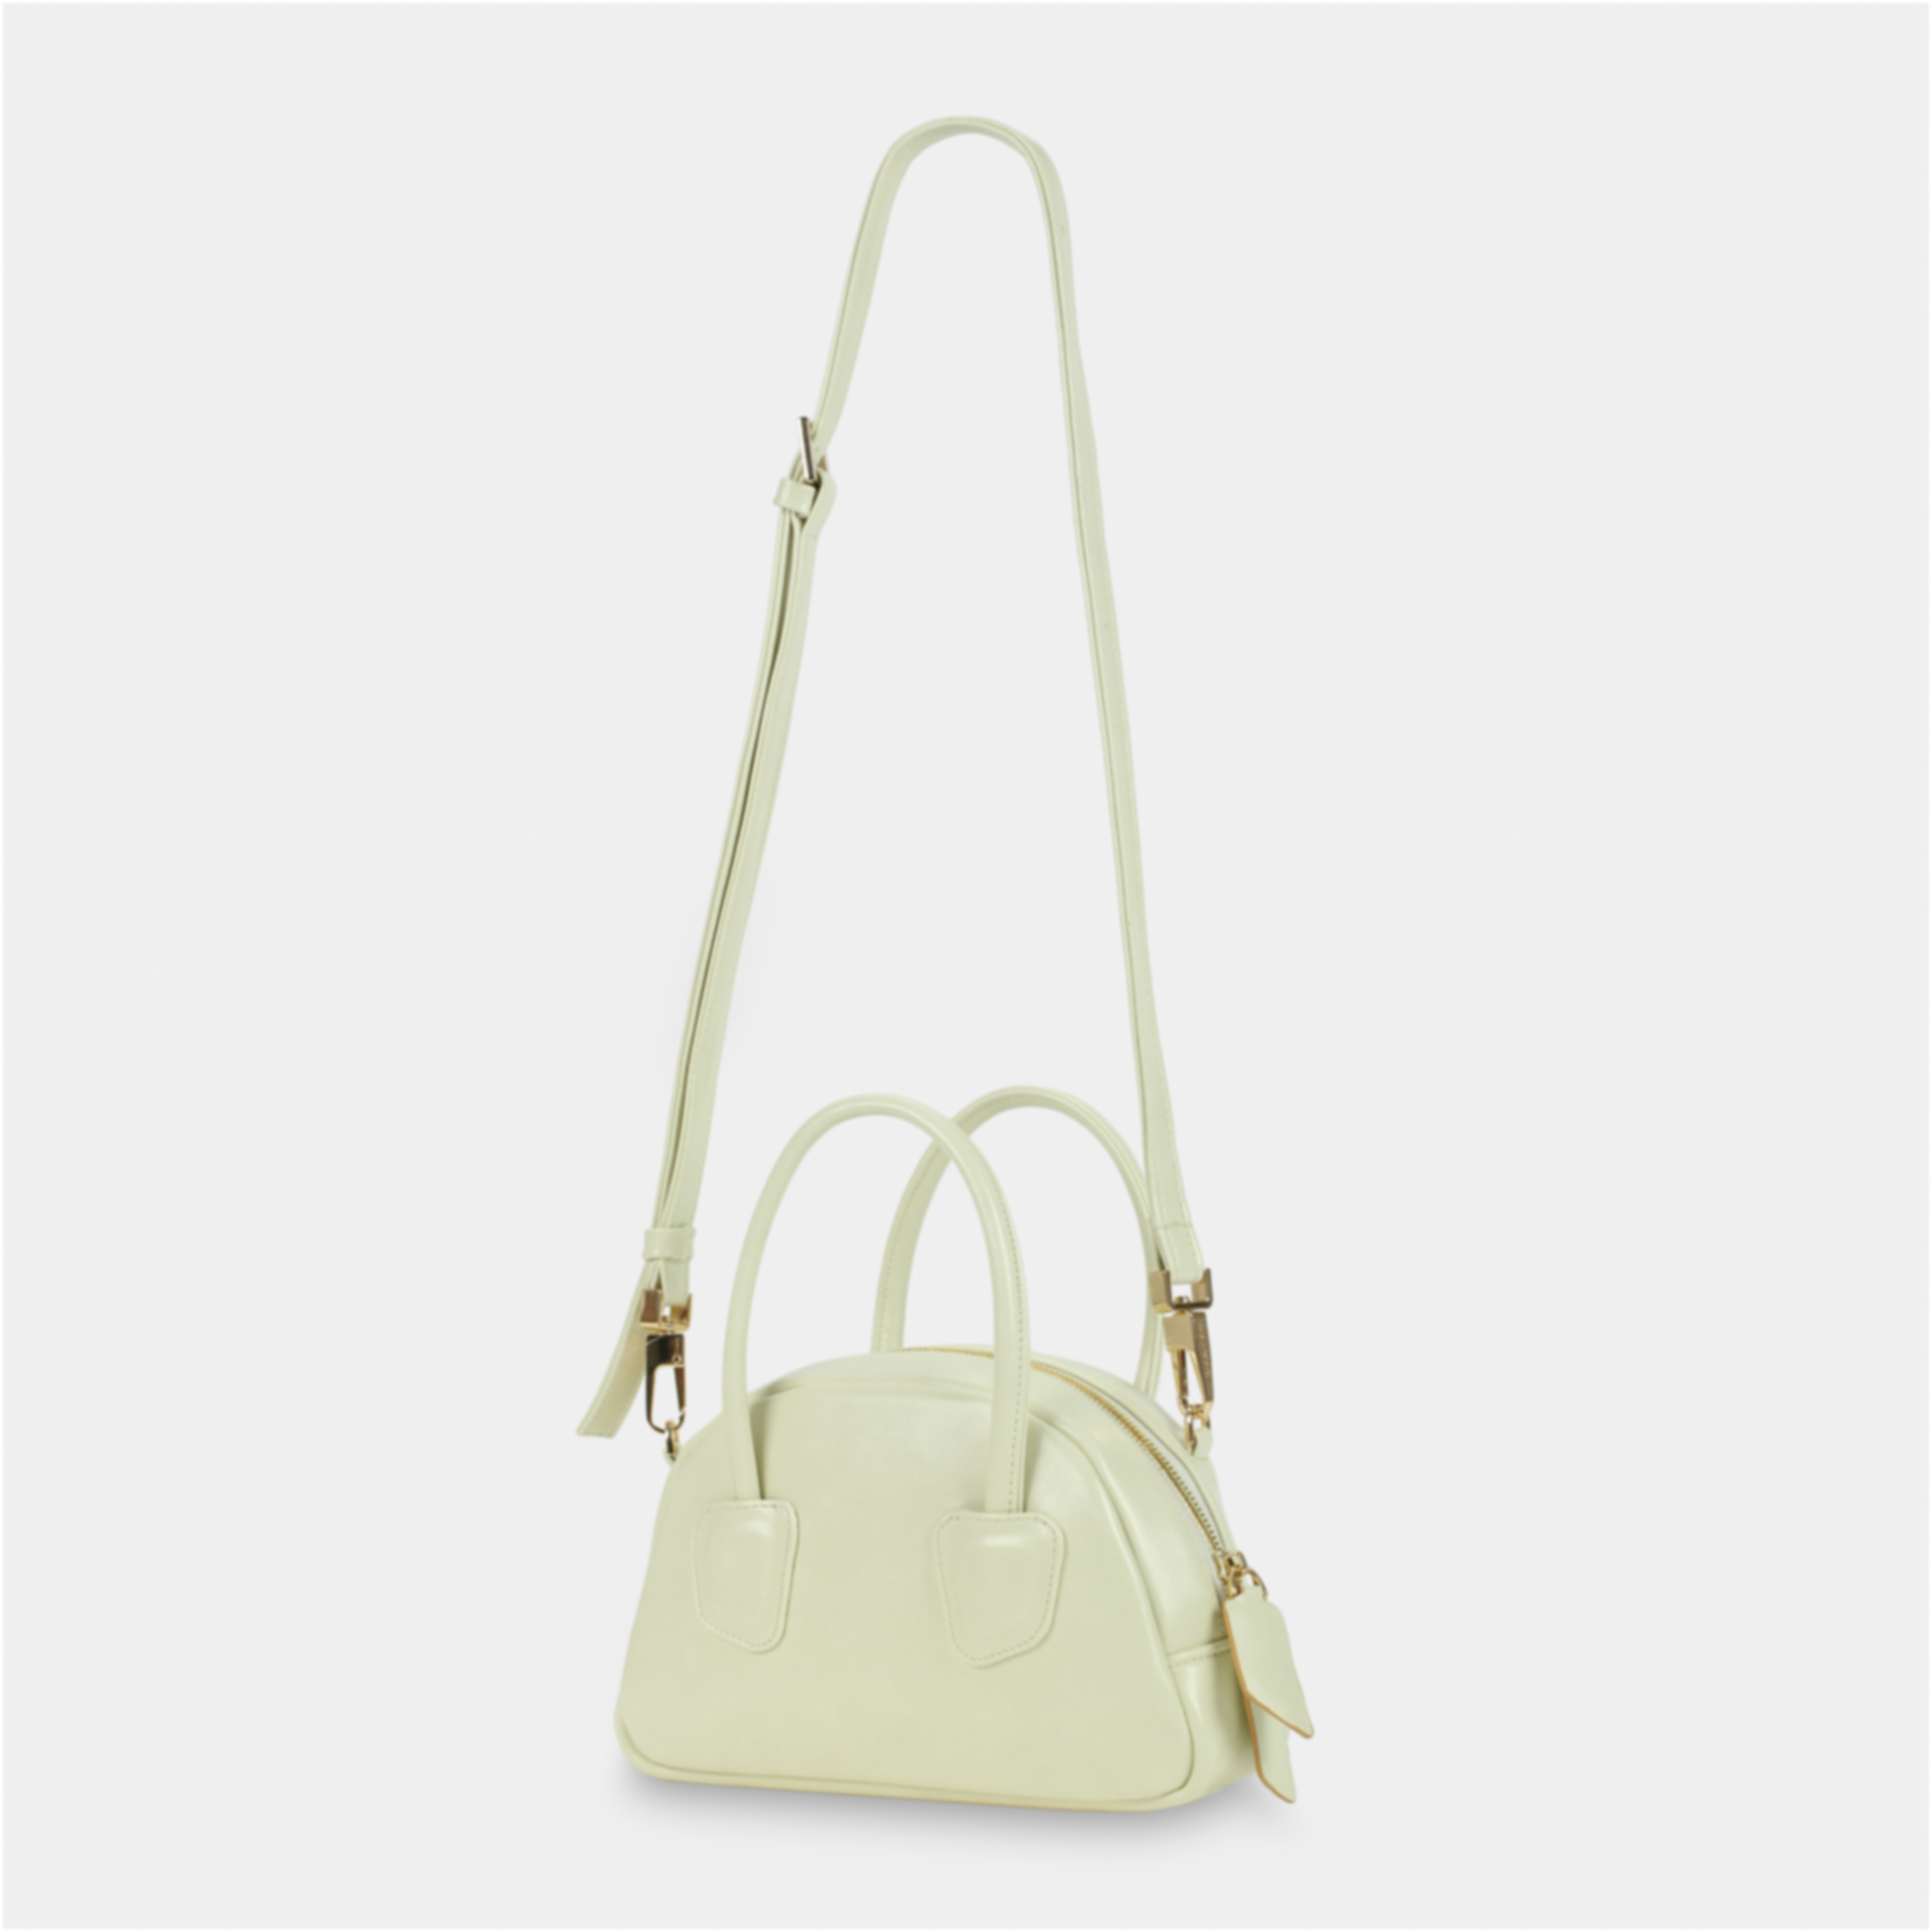 TACOS Handbag in White color large size (M)